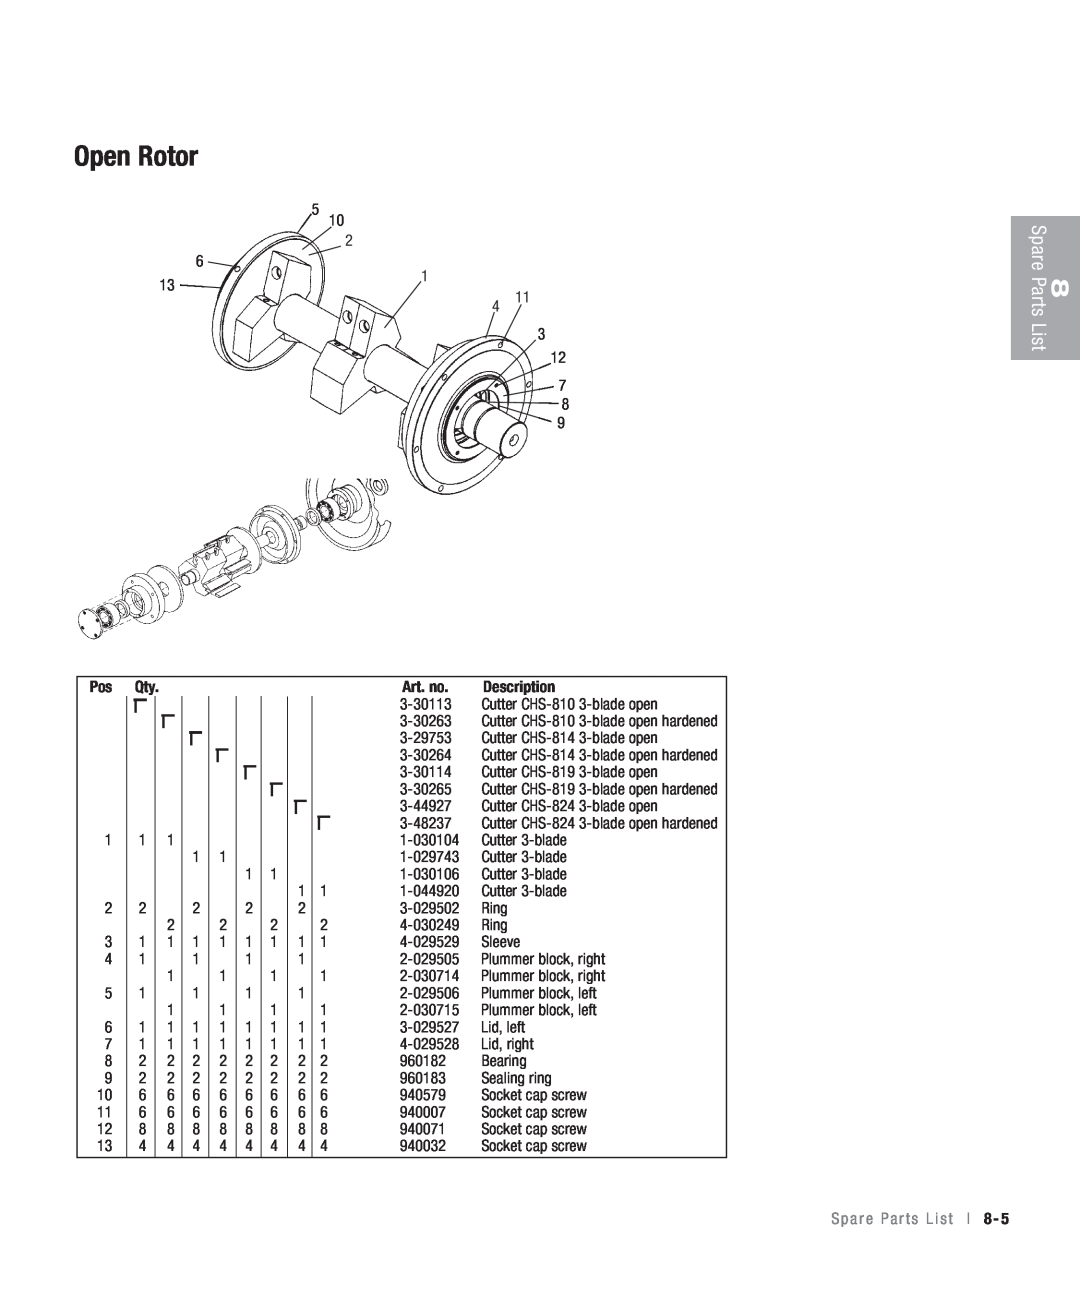 Conair CHS-810 manual Open Rotor, List, Spare, Parts, Art. no, Description, S p a r e P a r t s L i s t l 8 